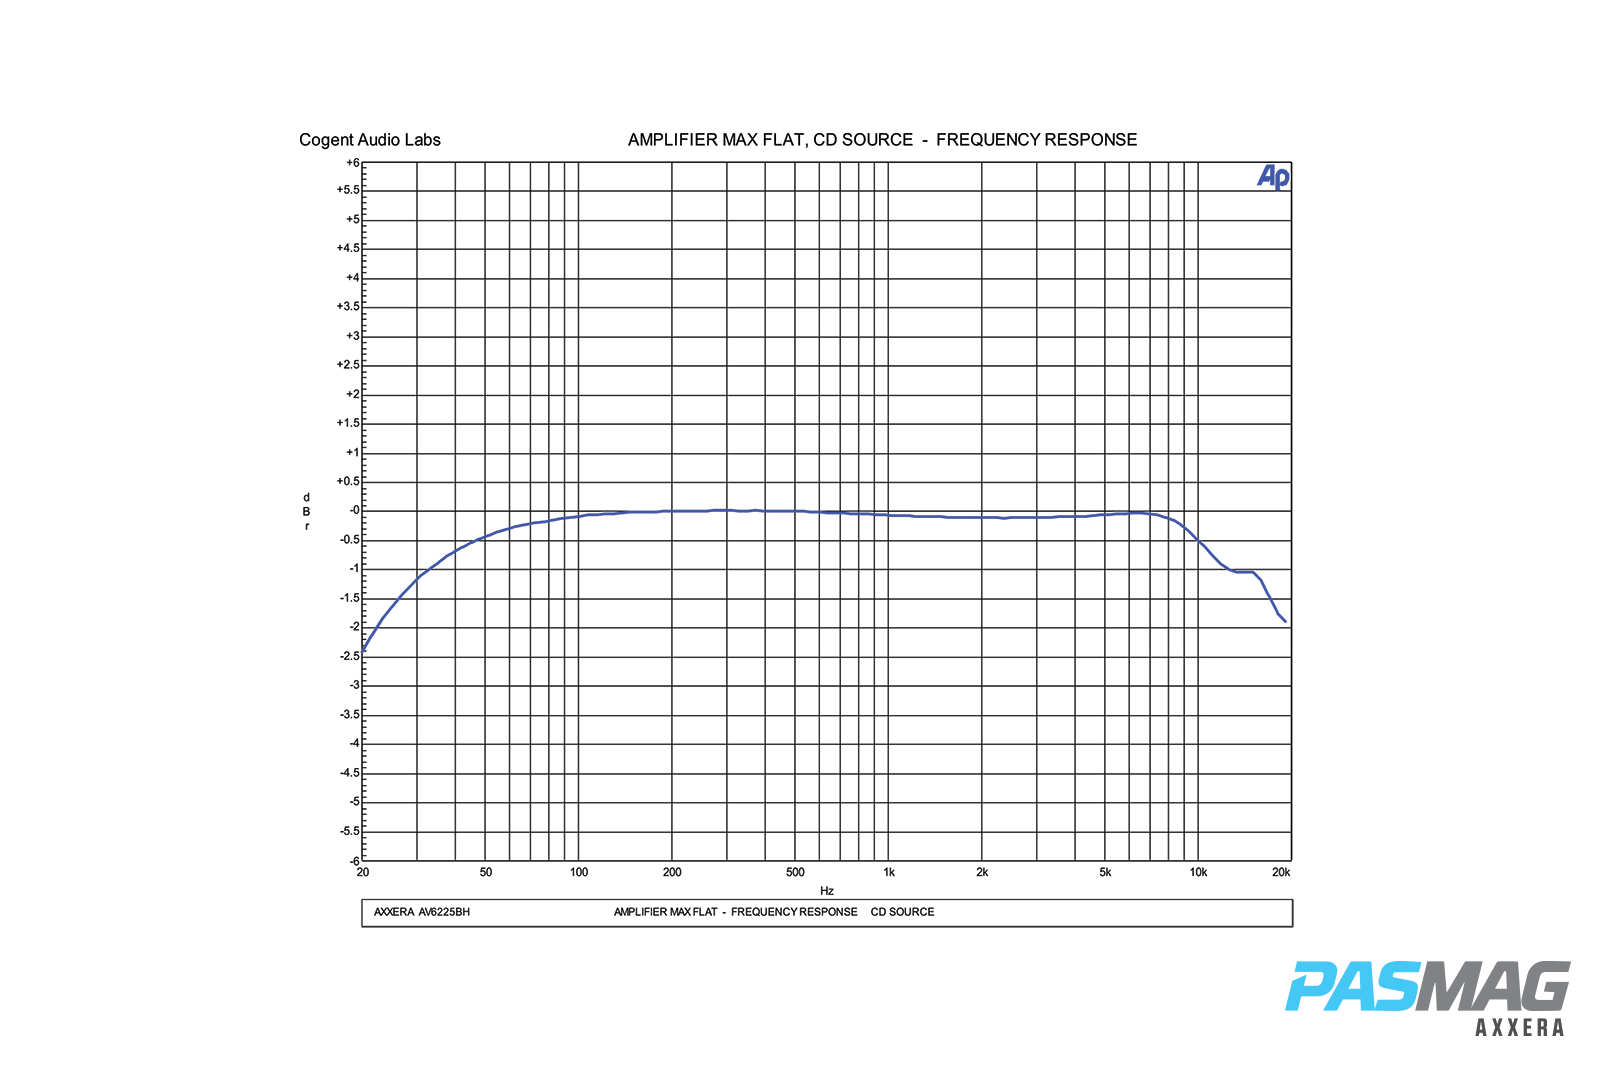 Axxera AV6225BH PASMAG Test Report 10